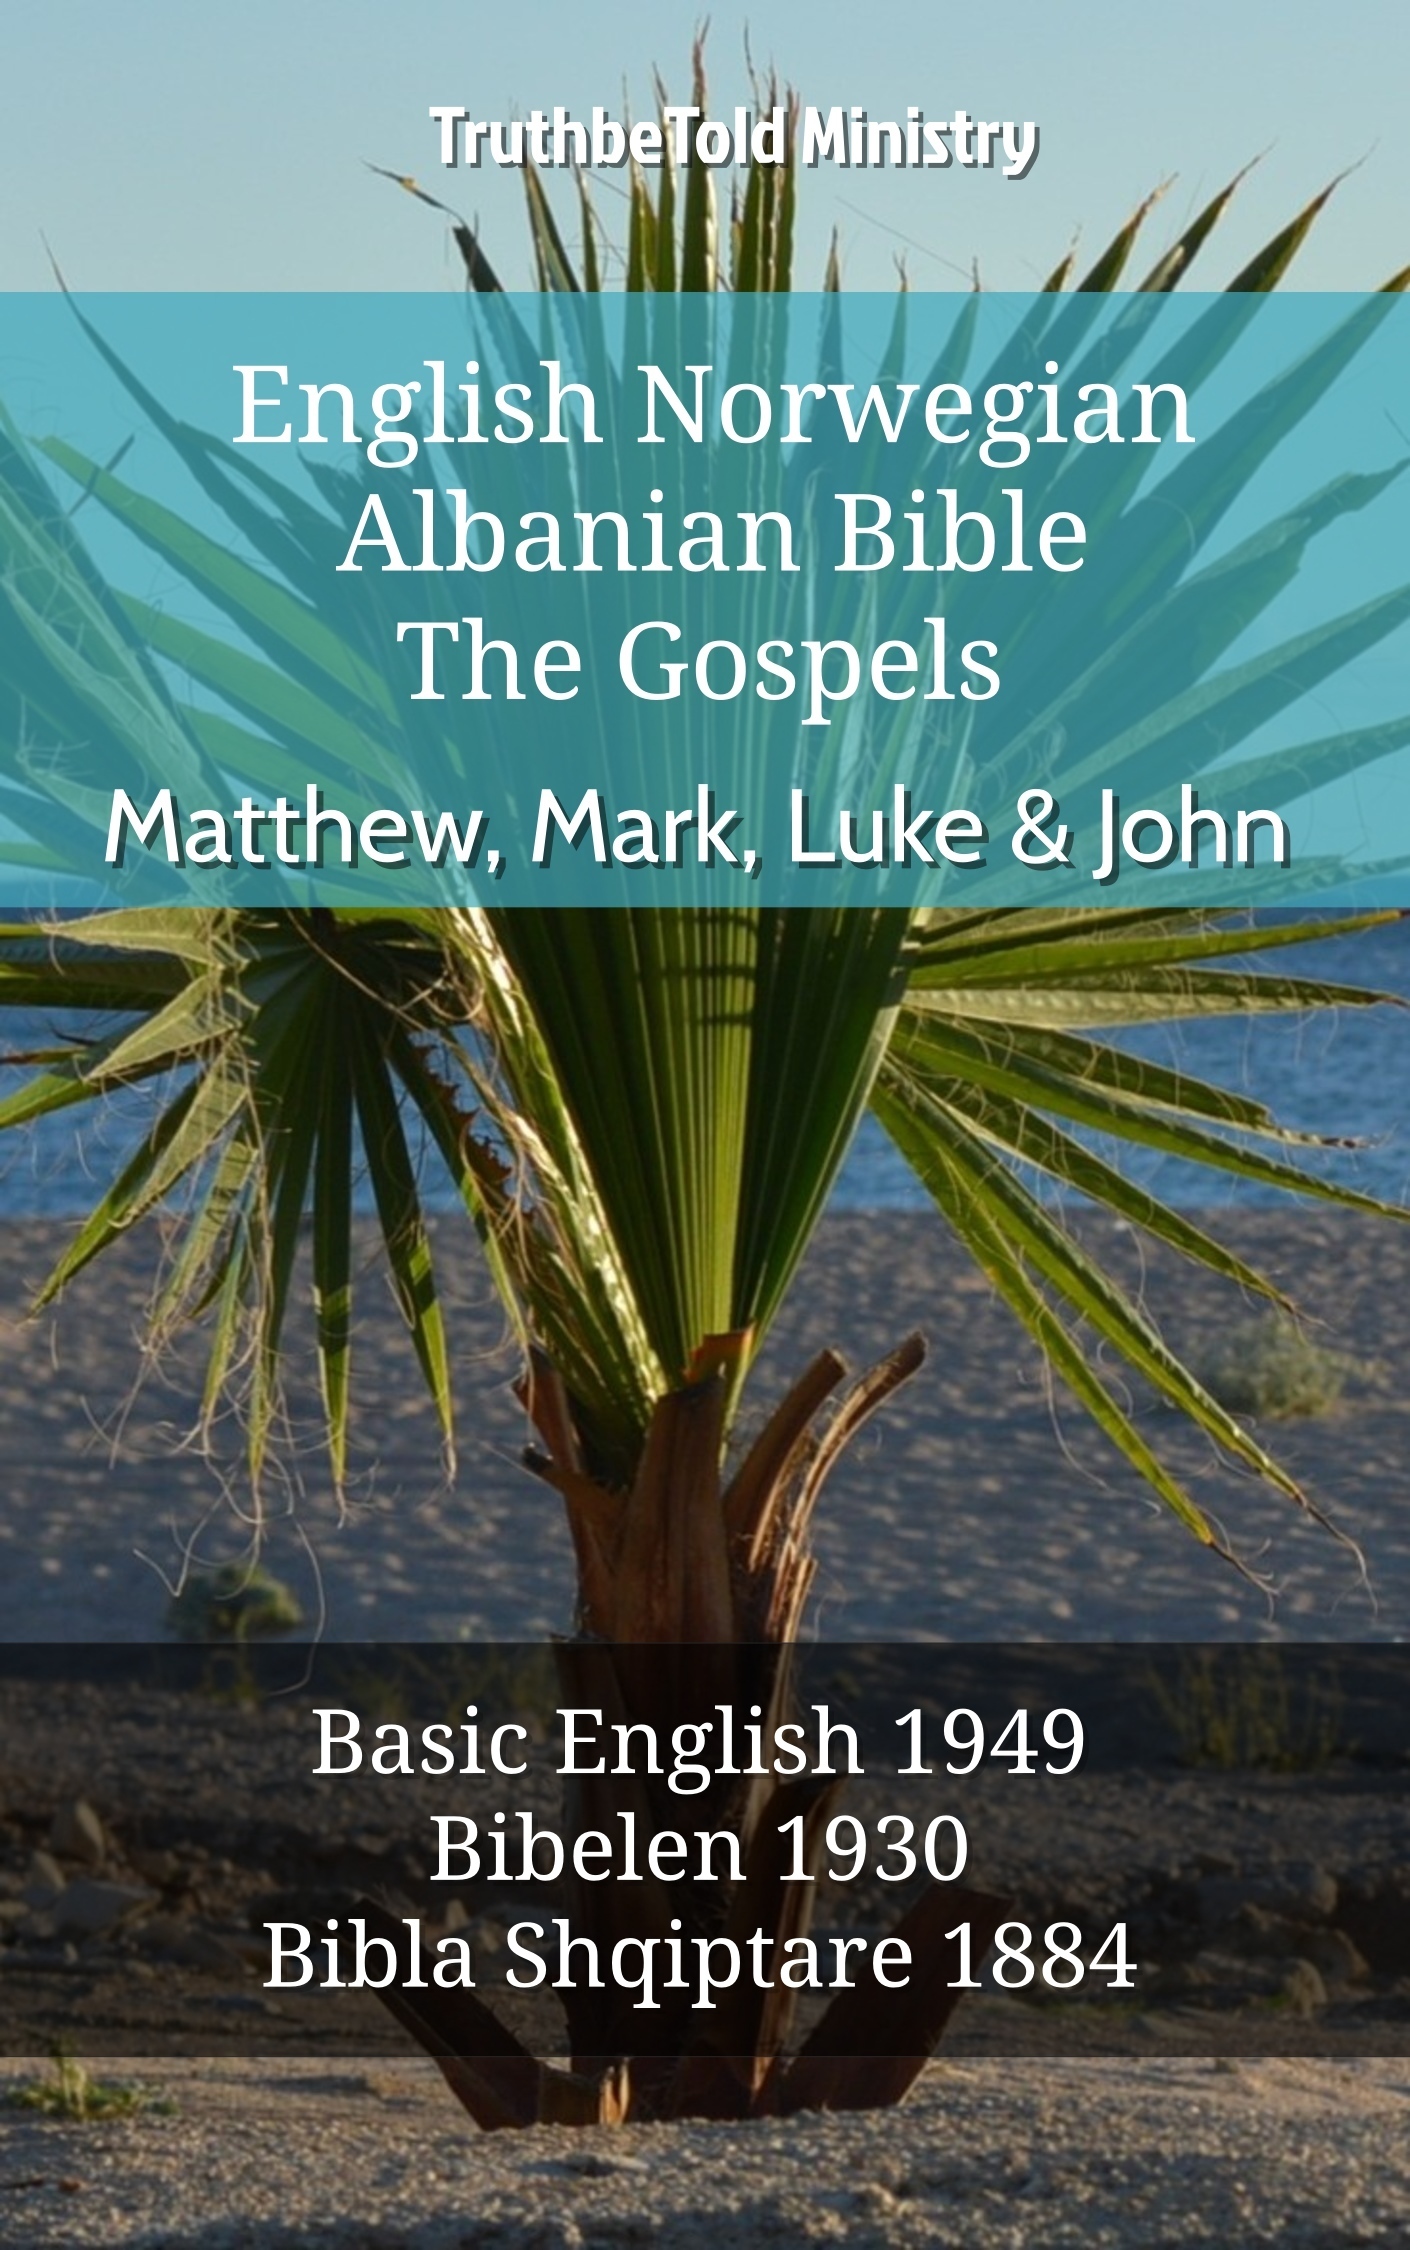 English Norwegian Albanian Bible - The Gospels - Matthew, Mark, Luke & John